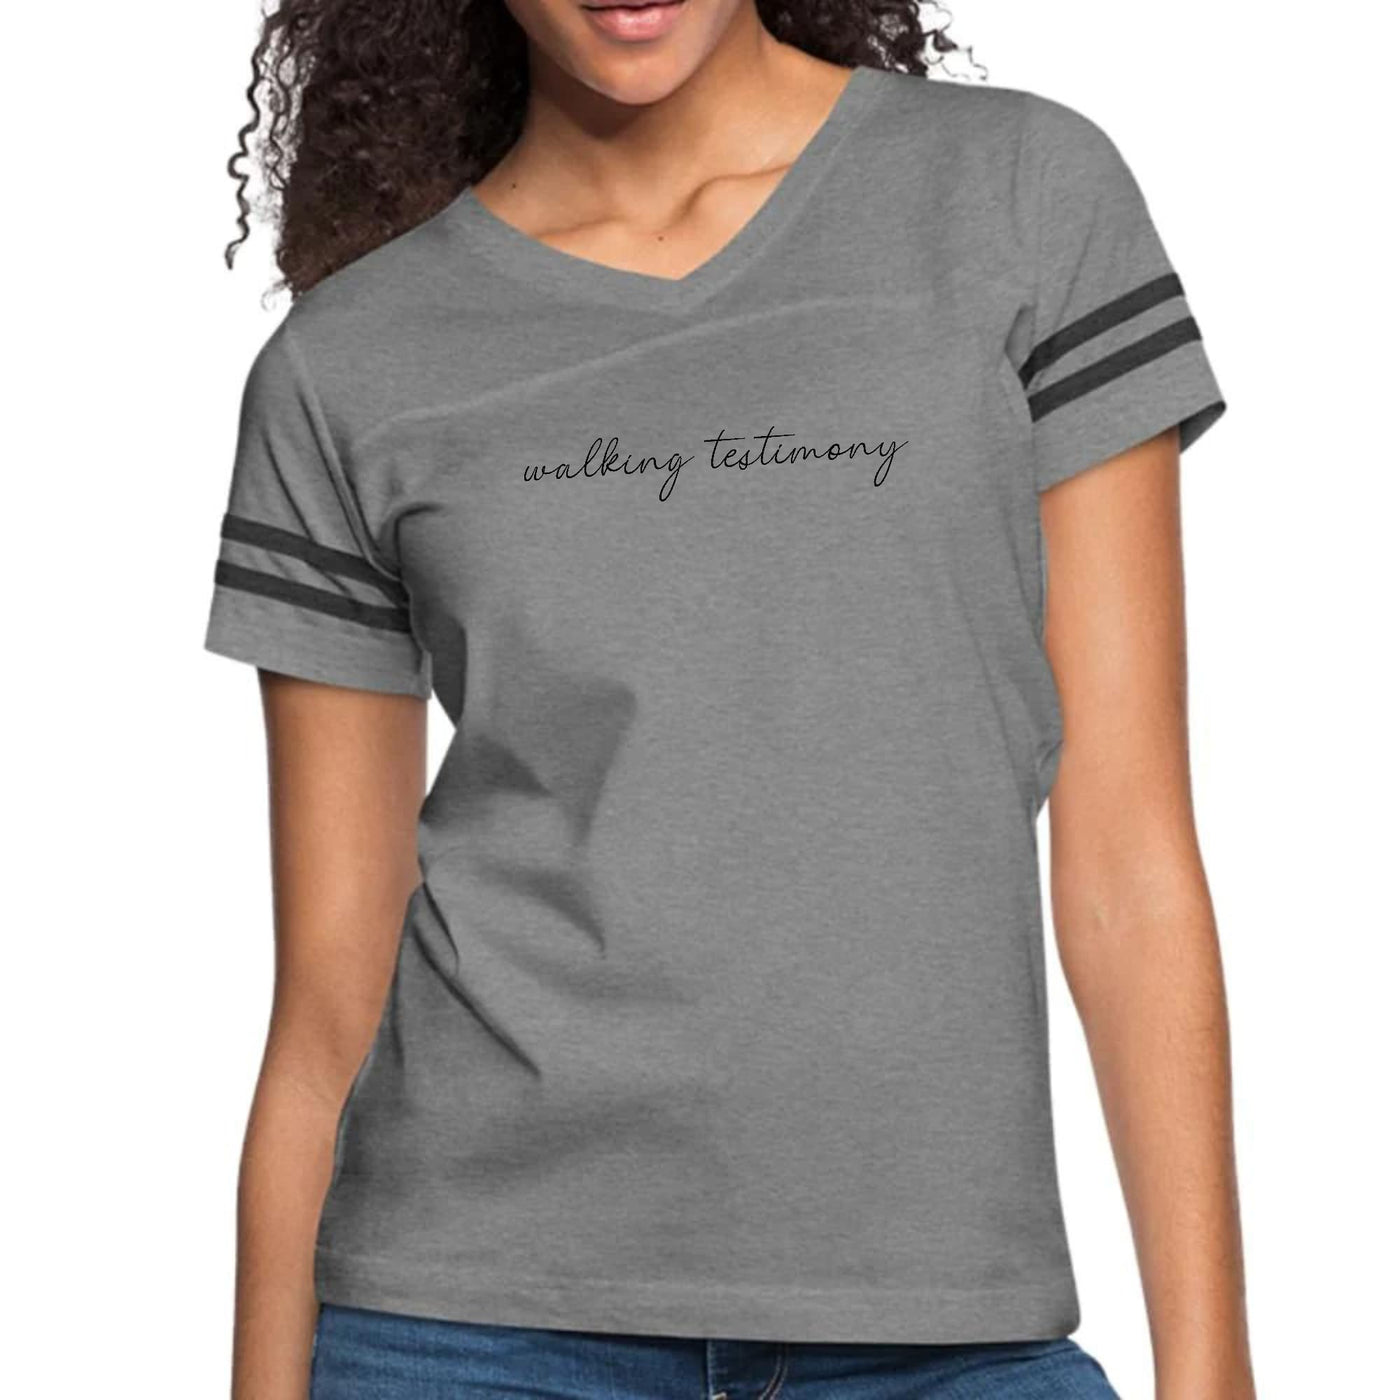 Womens Vintage Sport Graphic T-shirt Say It Soul Walking Testimony - Womens